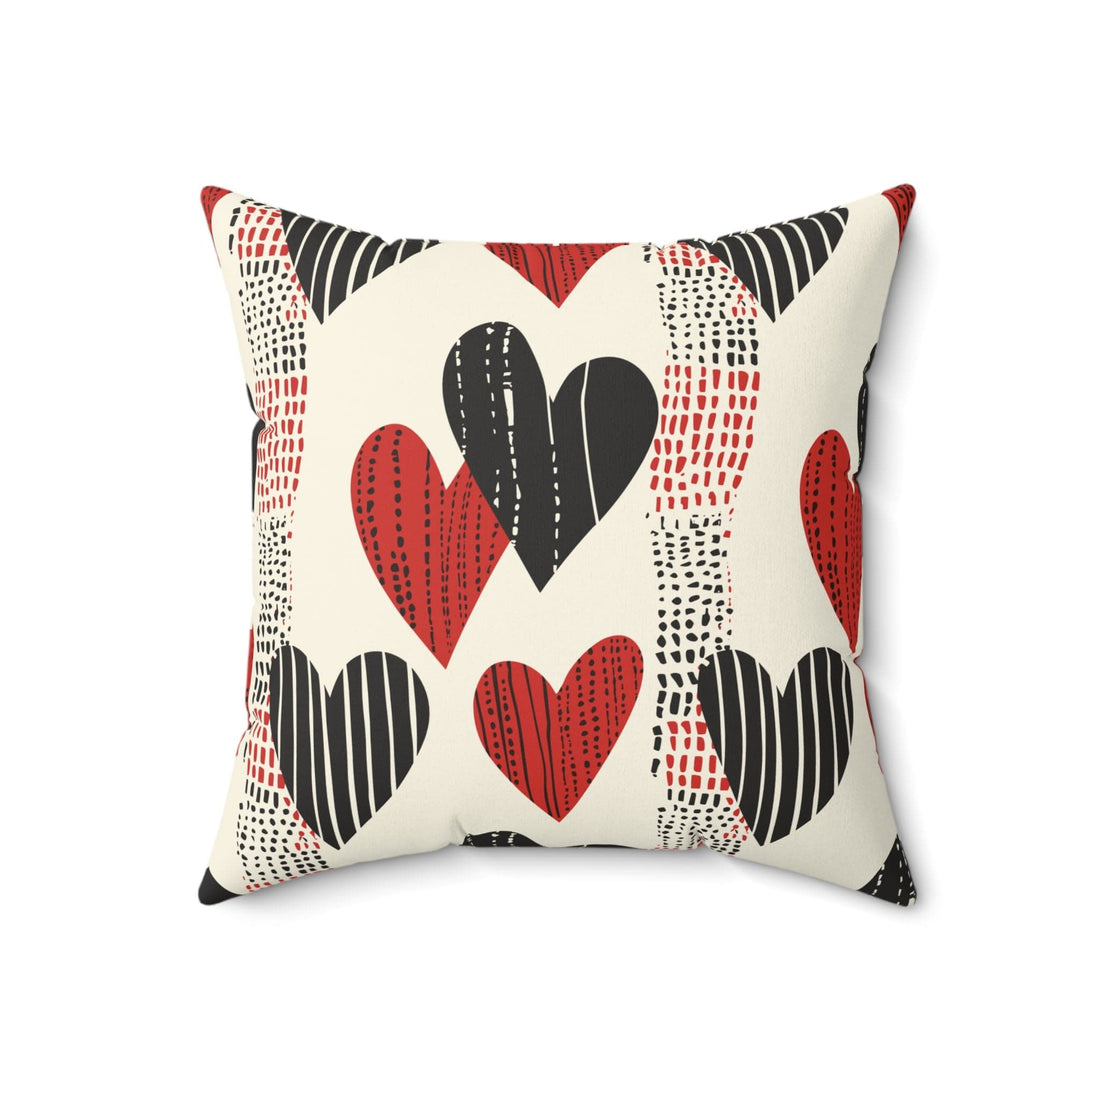 Kate McEnroe New York Mid Century Modern Retro Love Heart Throw PillowThrow Pillows28017301002910332269